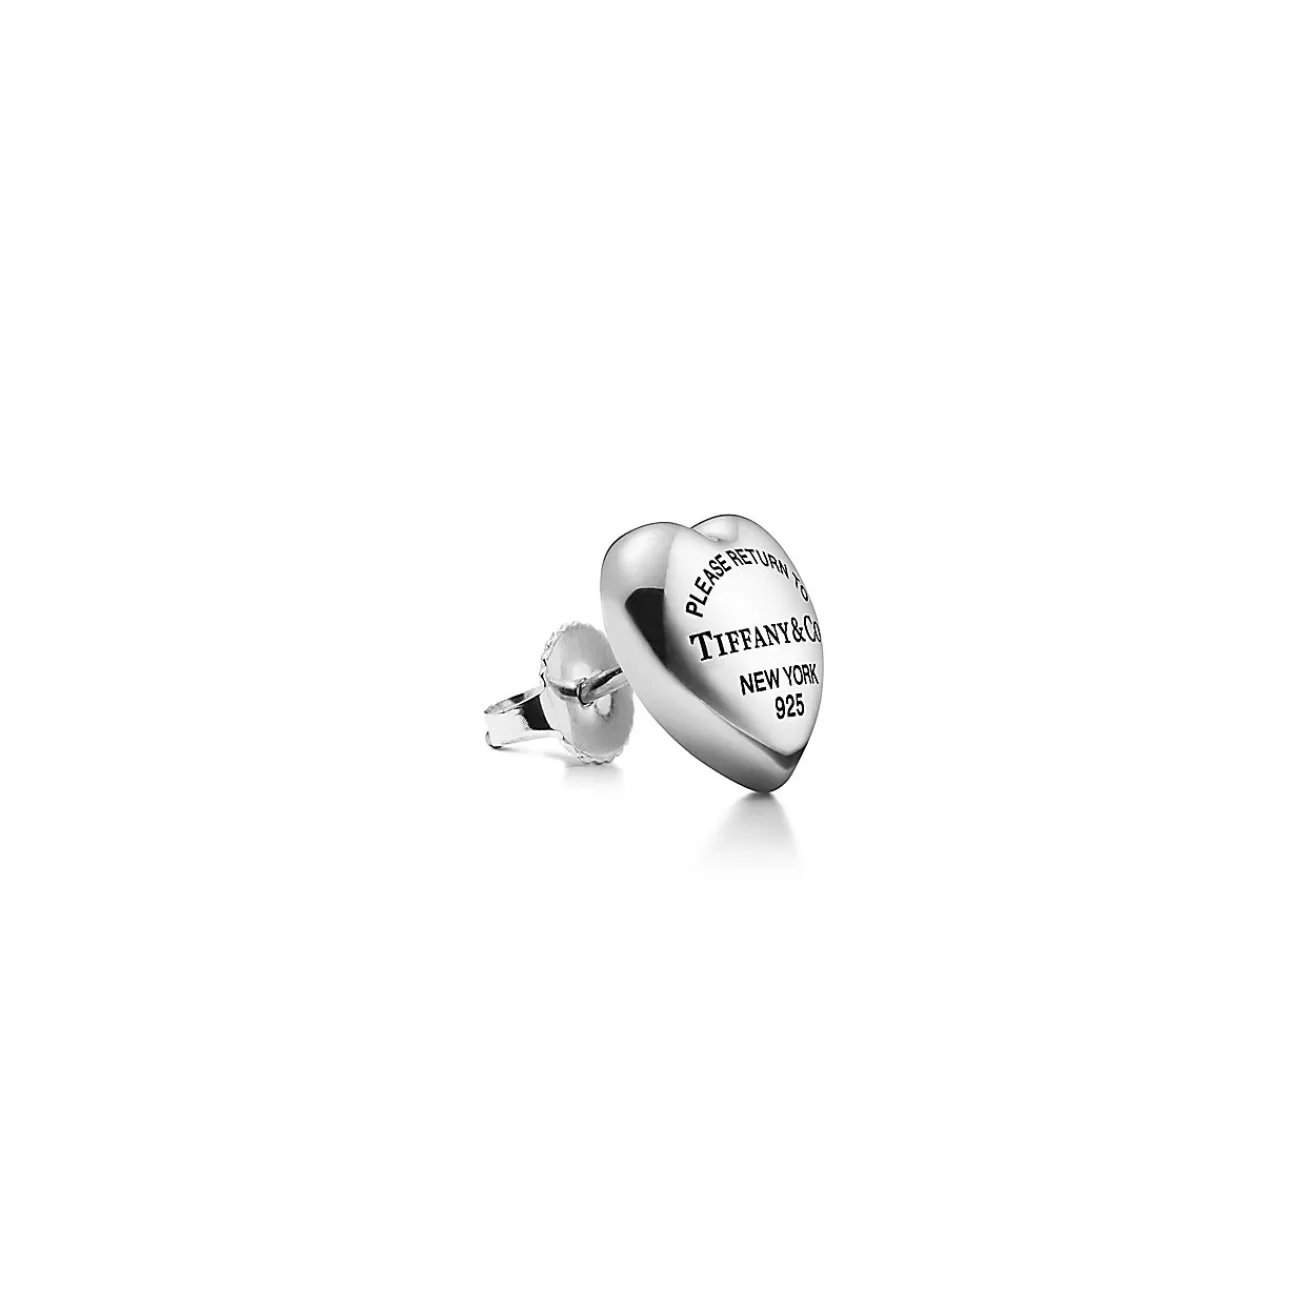 Tiffany & Co. Return to Tiffany® Full Heart Earrings in Sterling Silver | ^ Earrings | Gifts for Her